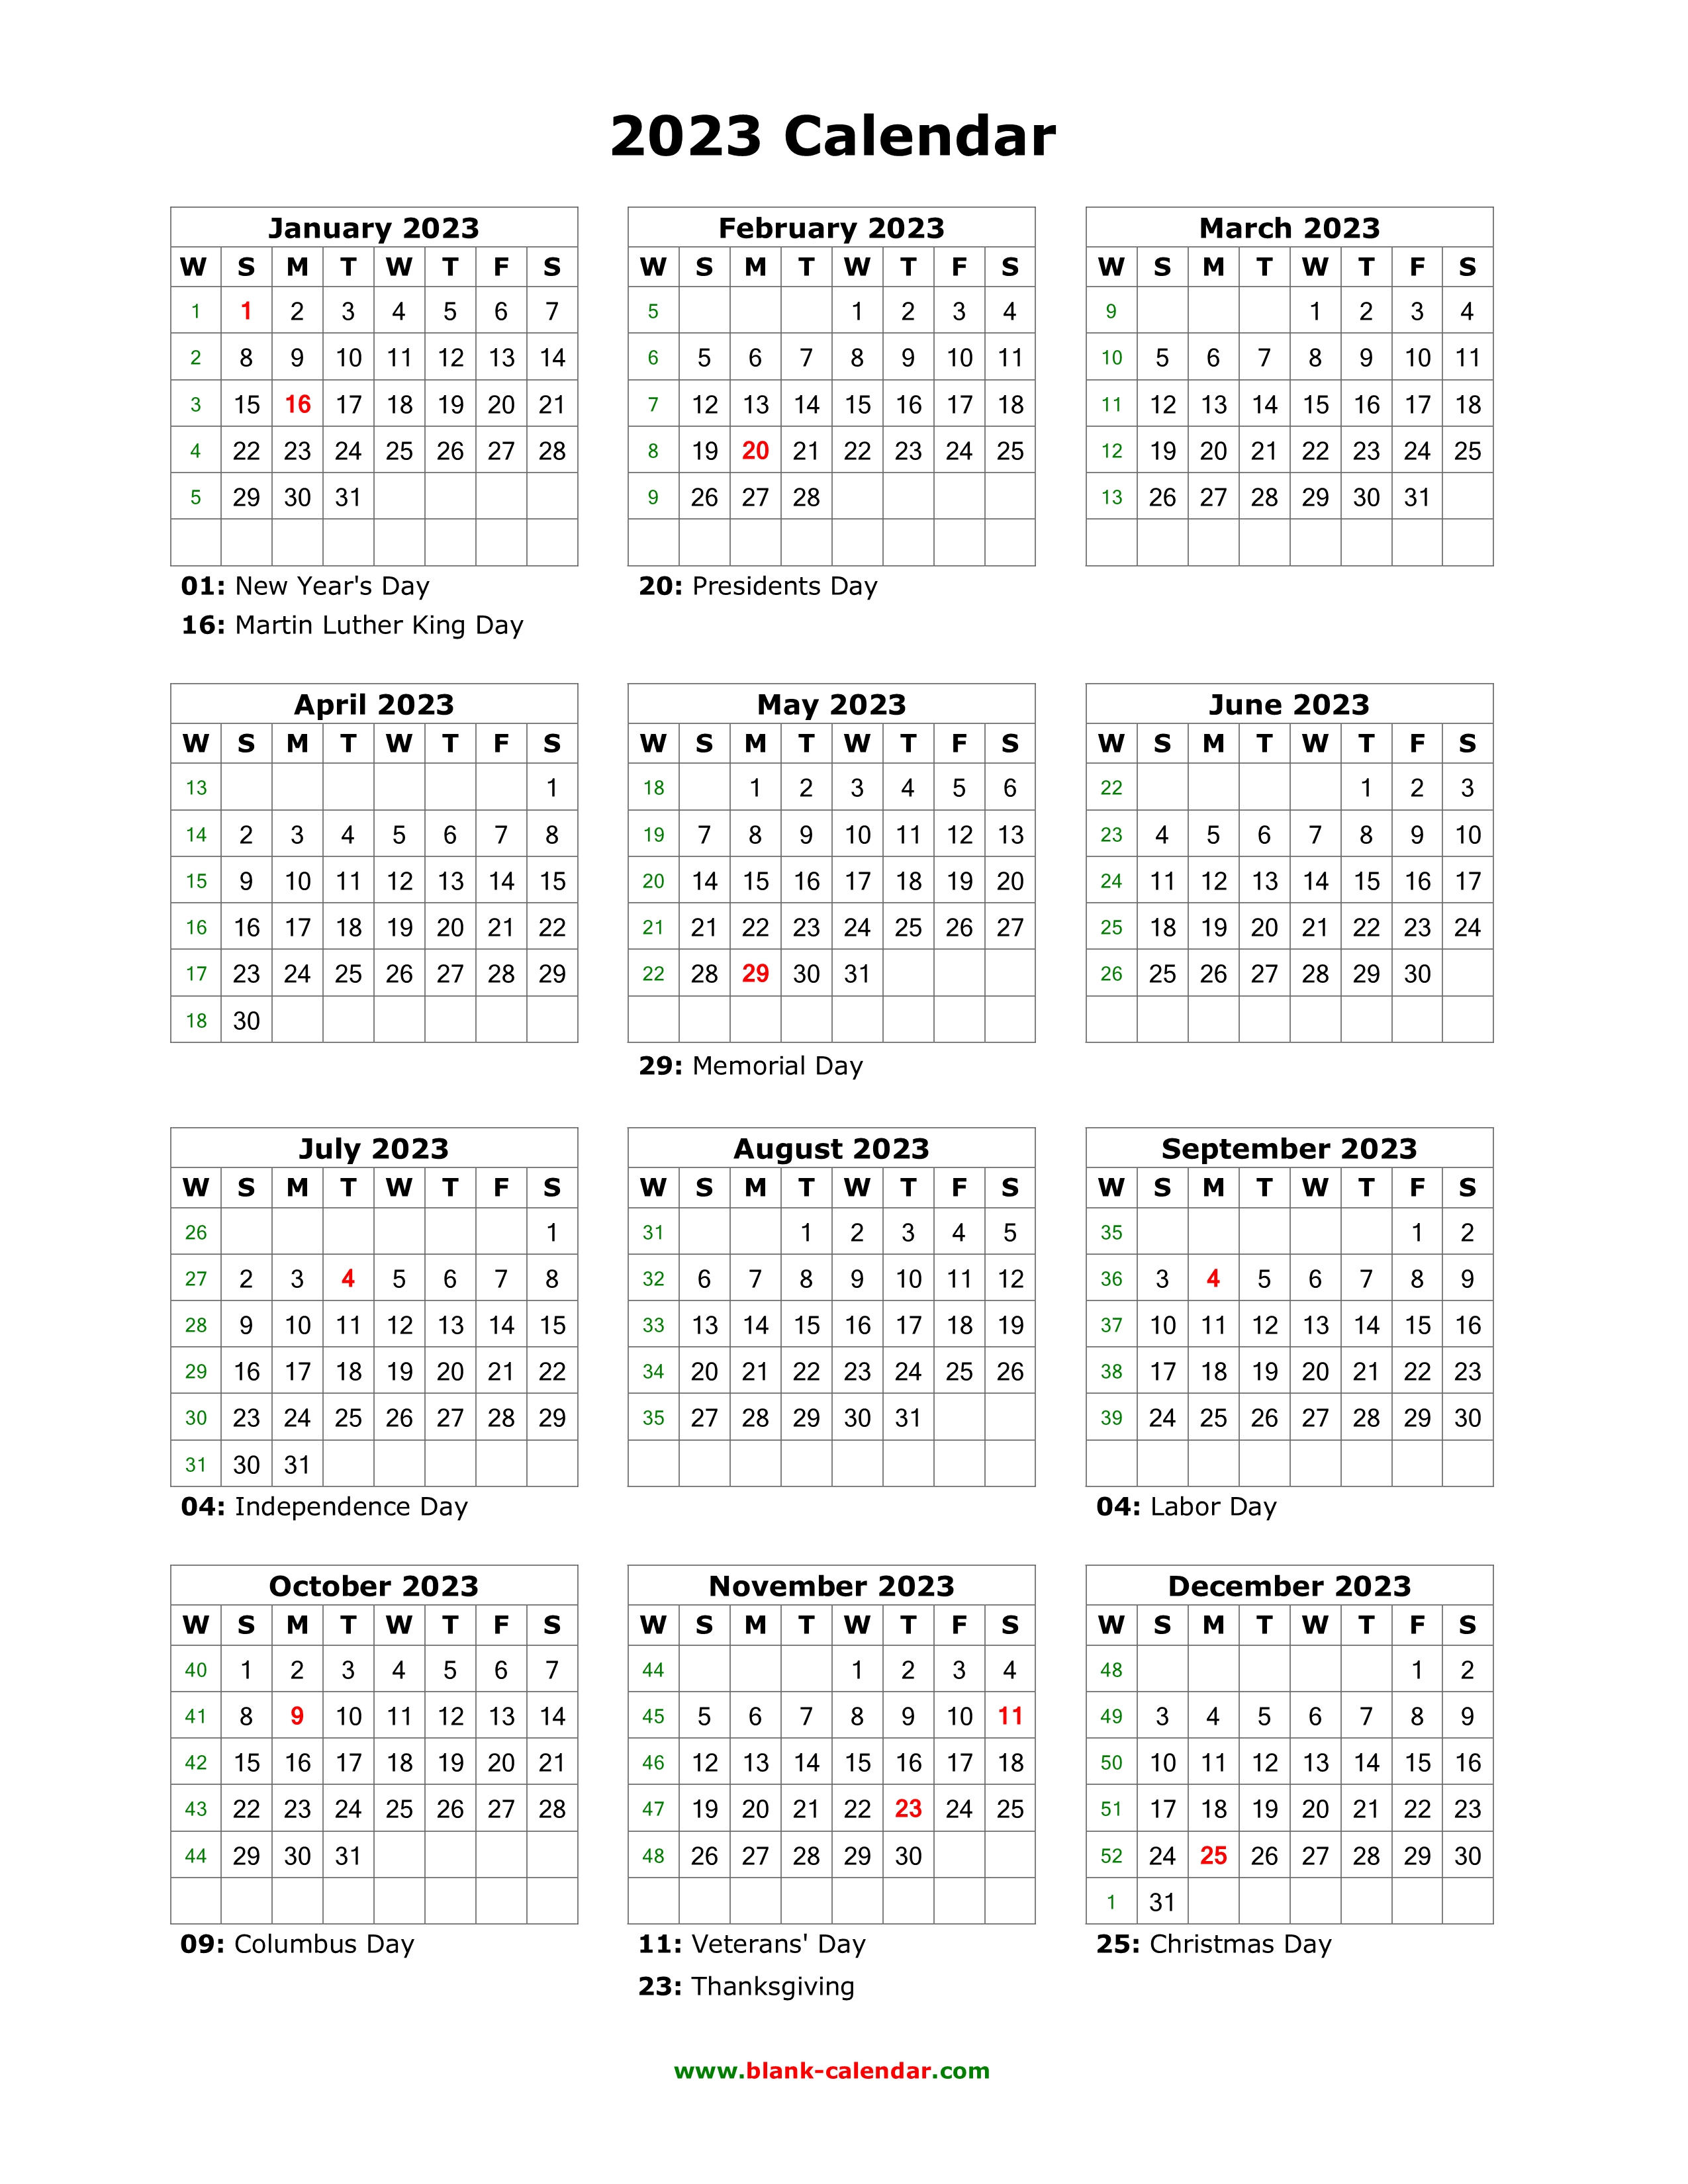 free-2023-calendar-with-holidays-ambassade-mauritanie-rabat